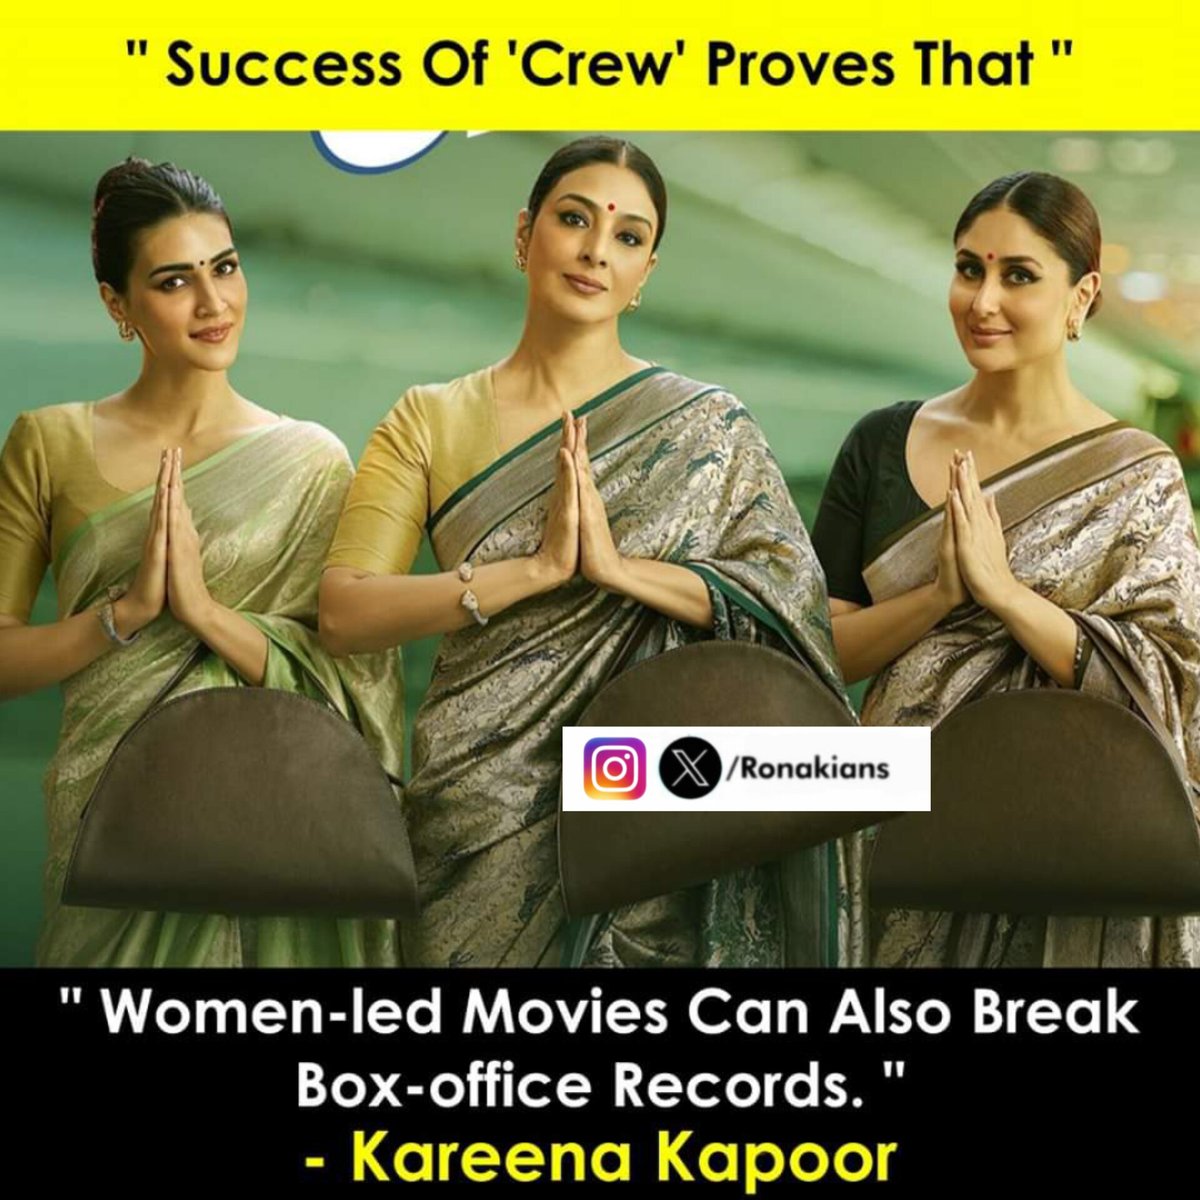 Well Said Kareena 💯

#Crewmovie #kareenakapoor